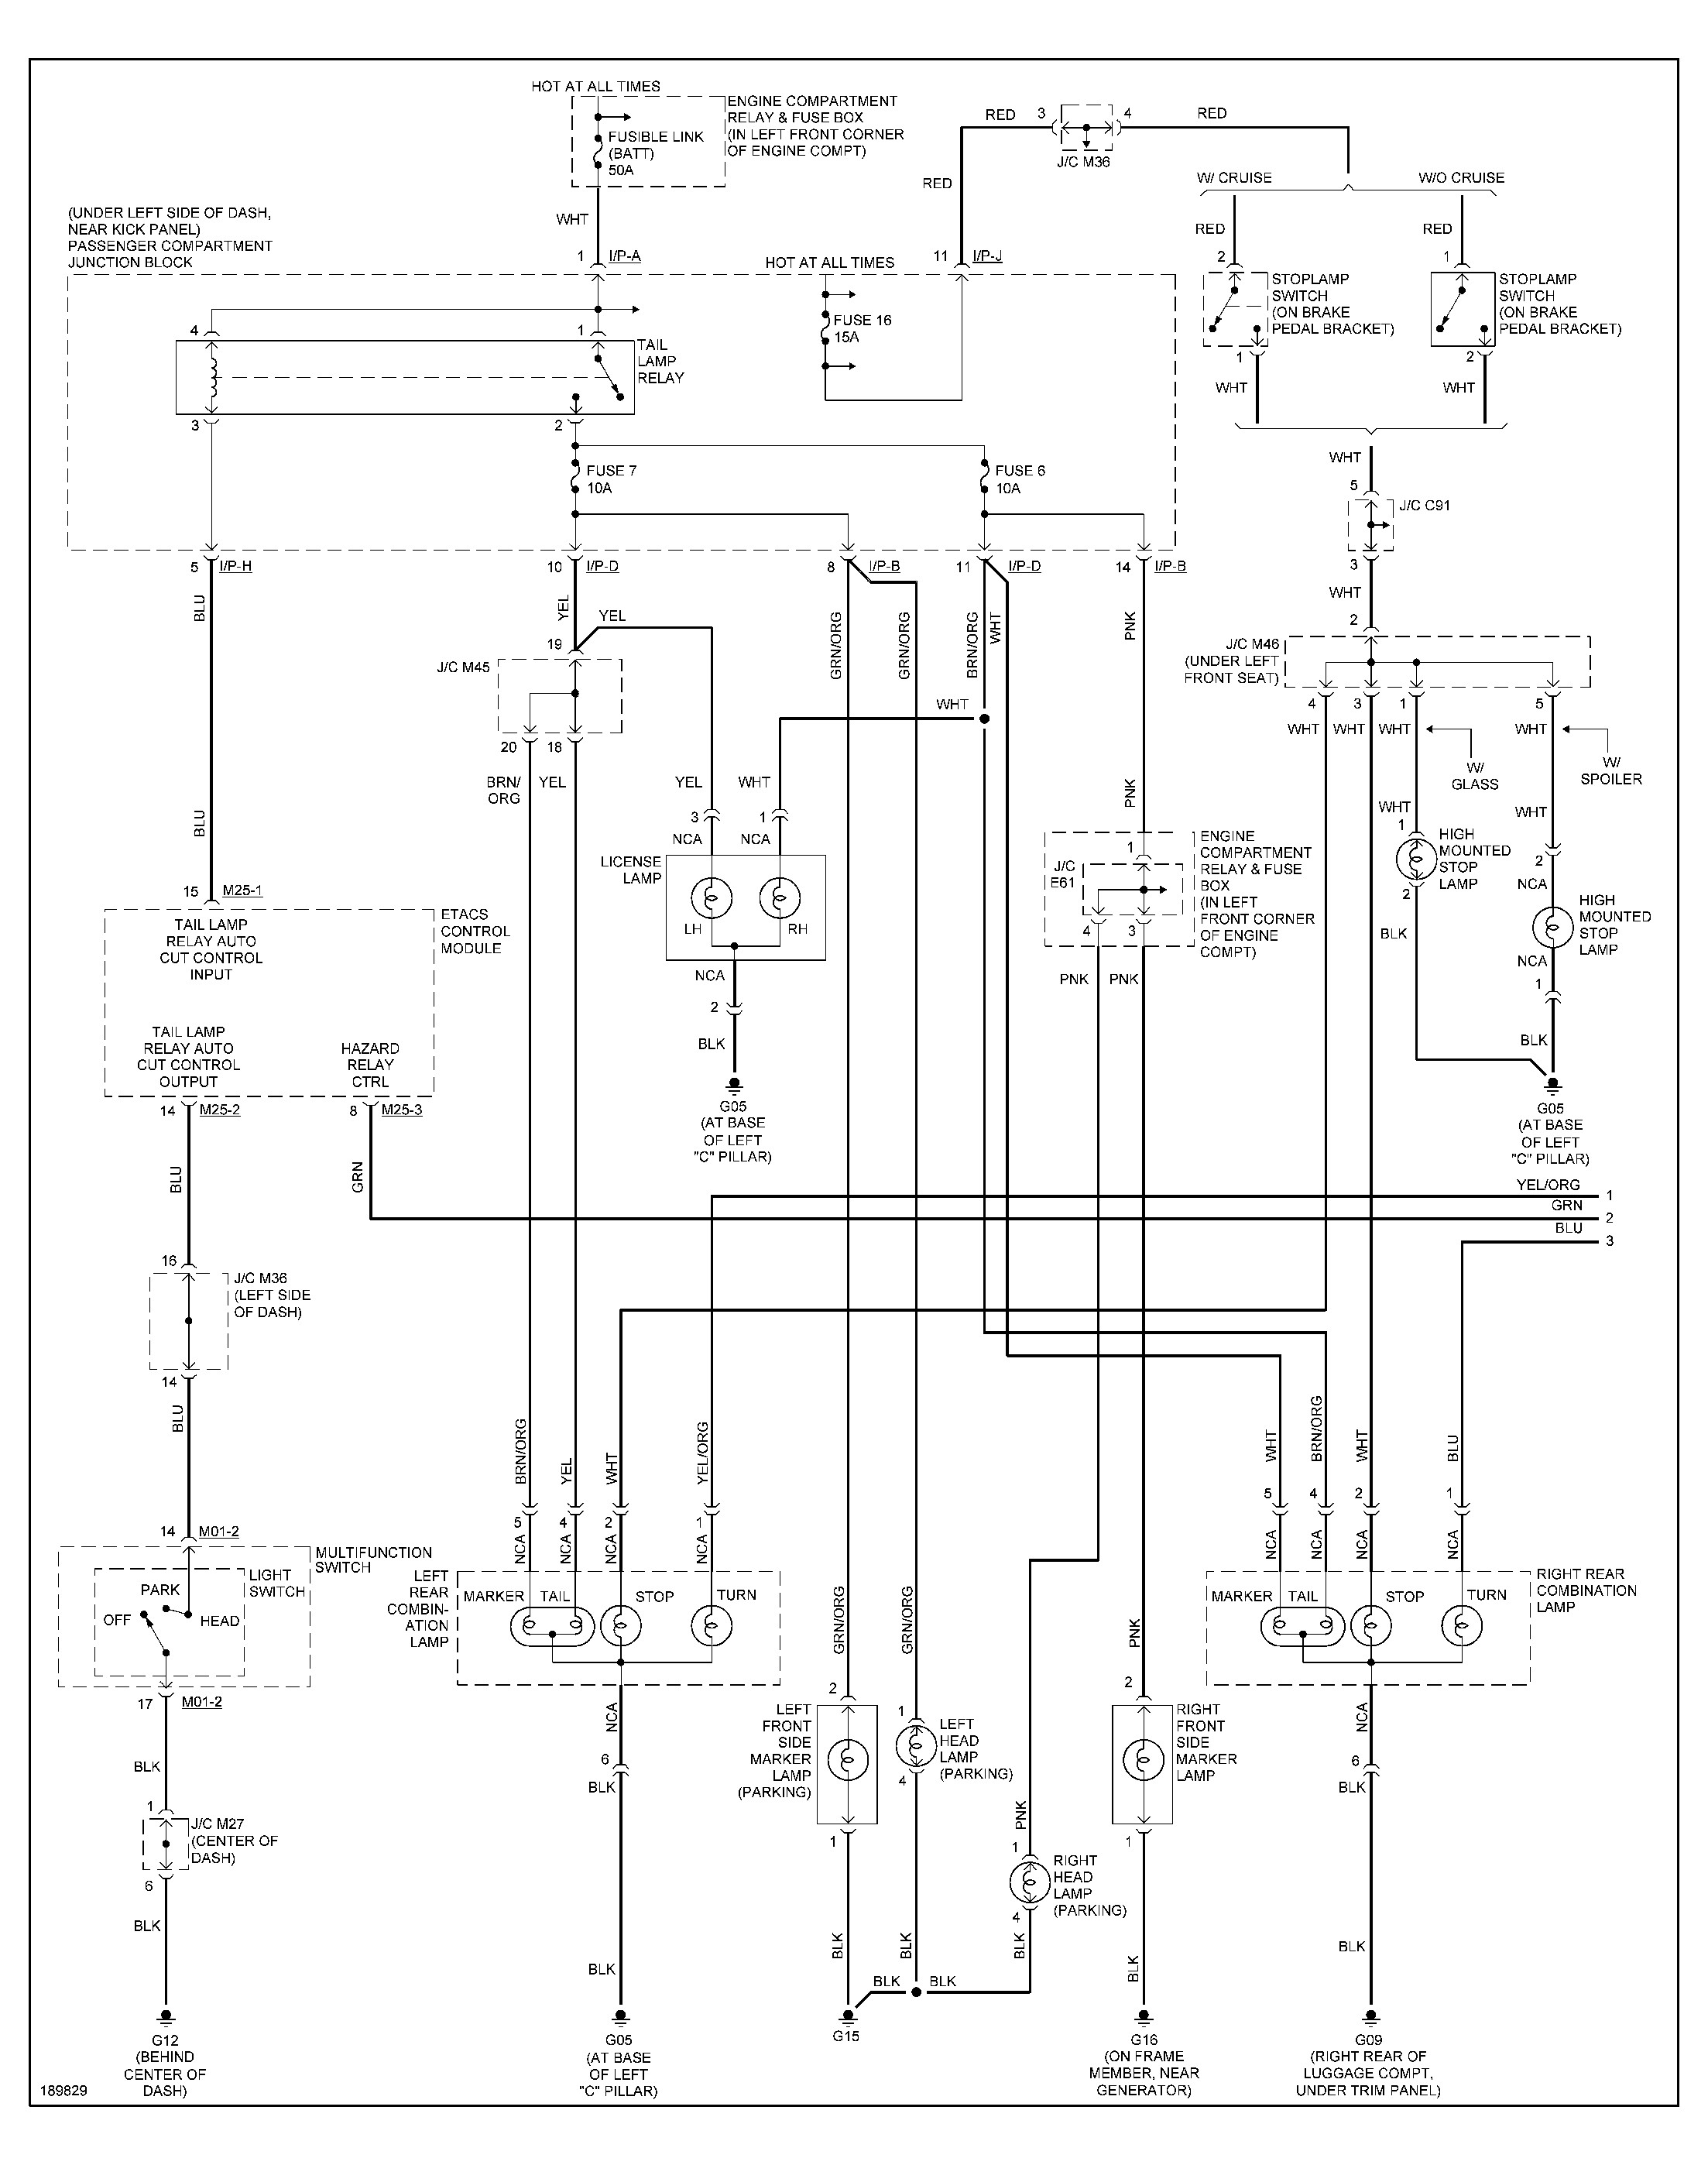 Hyundai Accent Wiring Diagram Take A Look About 04 Hyundai Accent with Cool Of Hyundai Accent Wiring Diagram